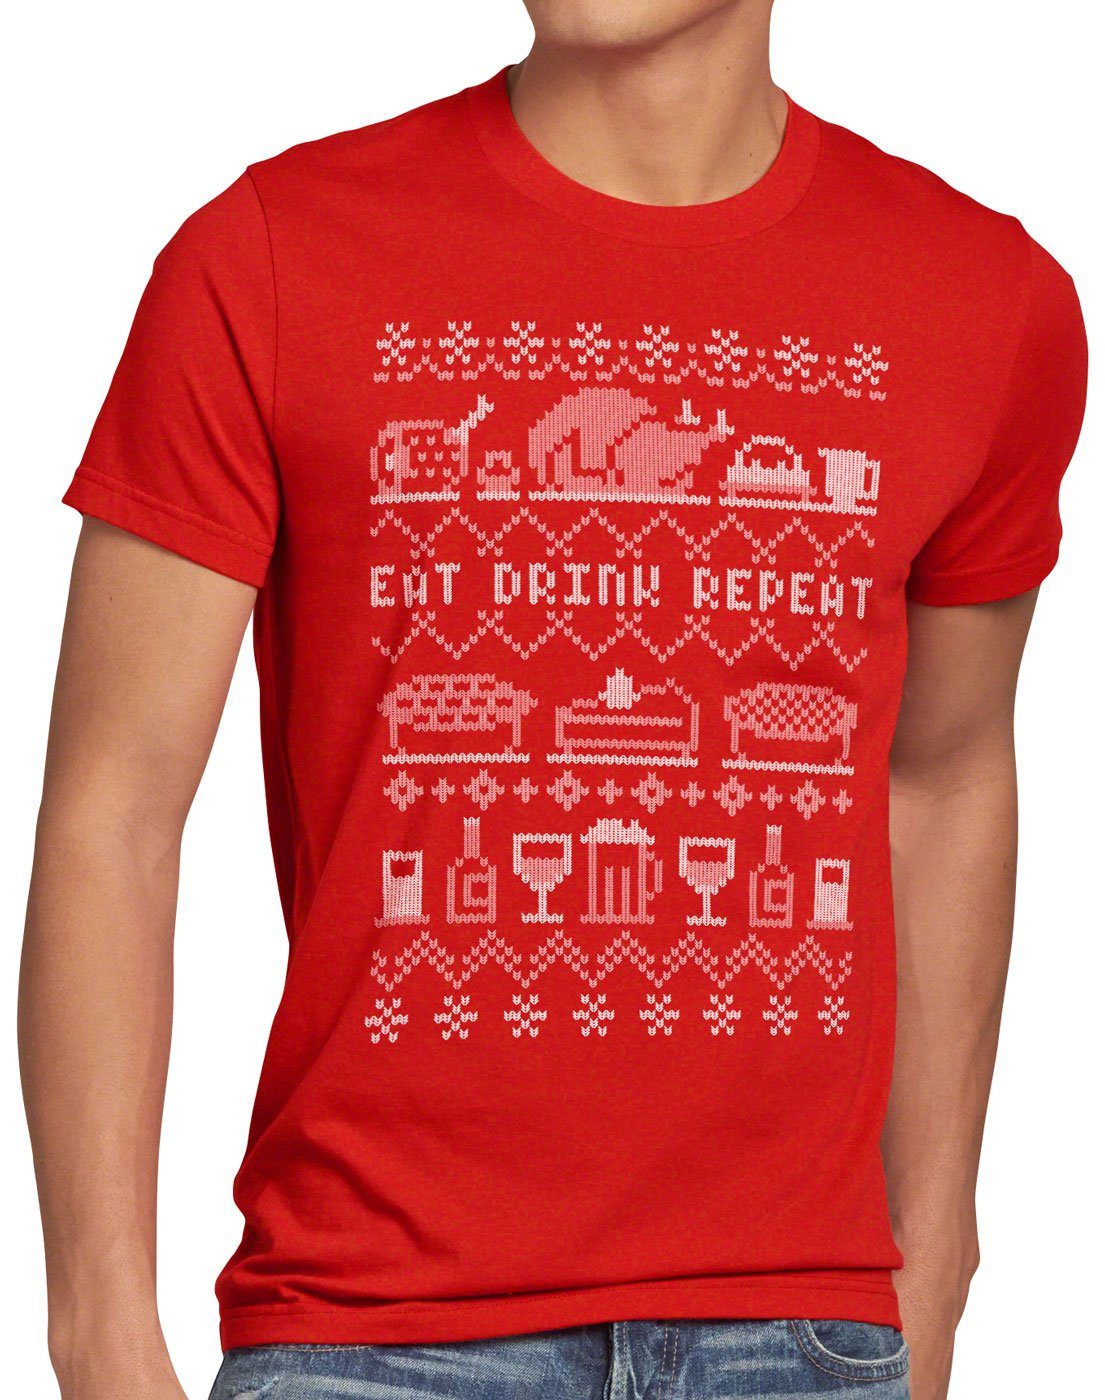 style3 Print-Shirt Herren T-Shirt Eat Drink Repeat Ugly Sweater weihnachtsessen fressen feiertage x-mas pulli rot